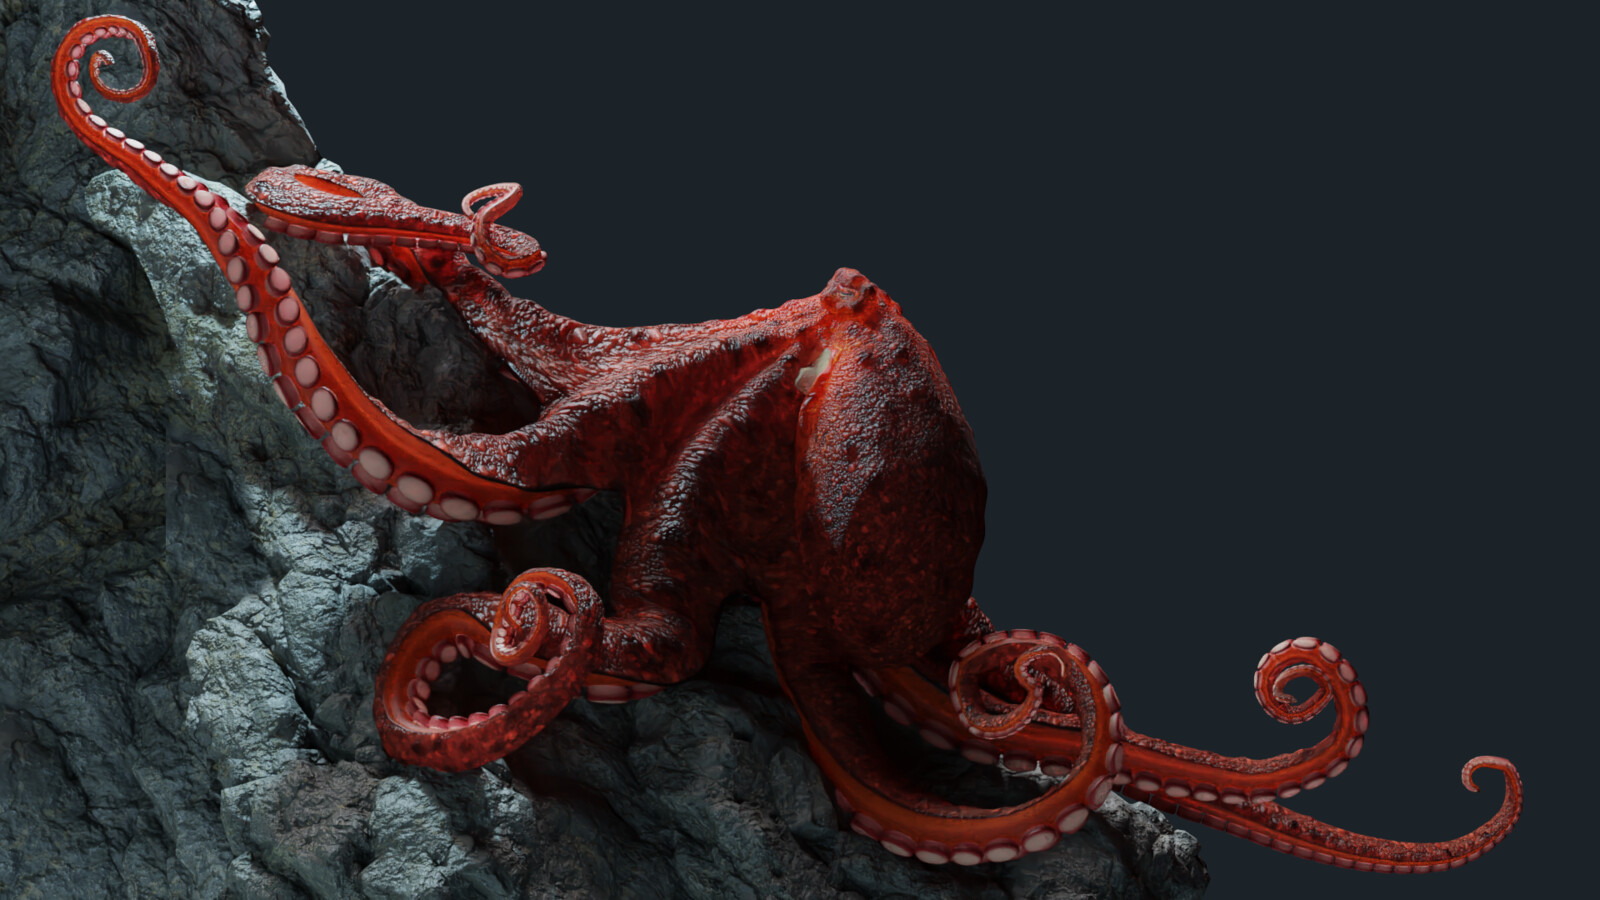 Octopus 4.0